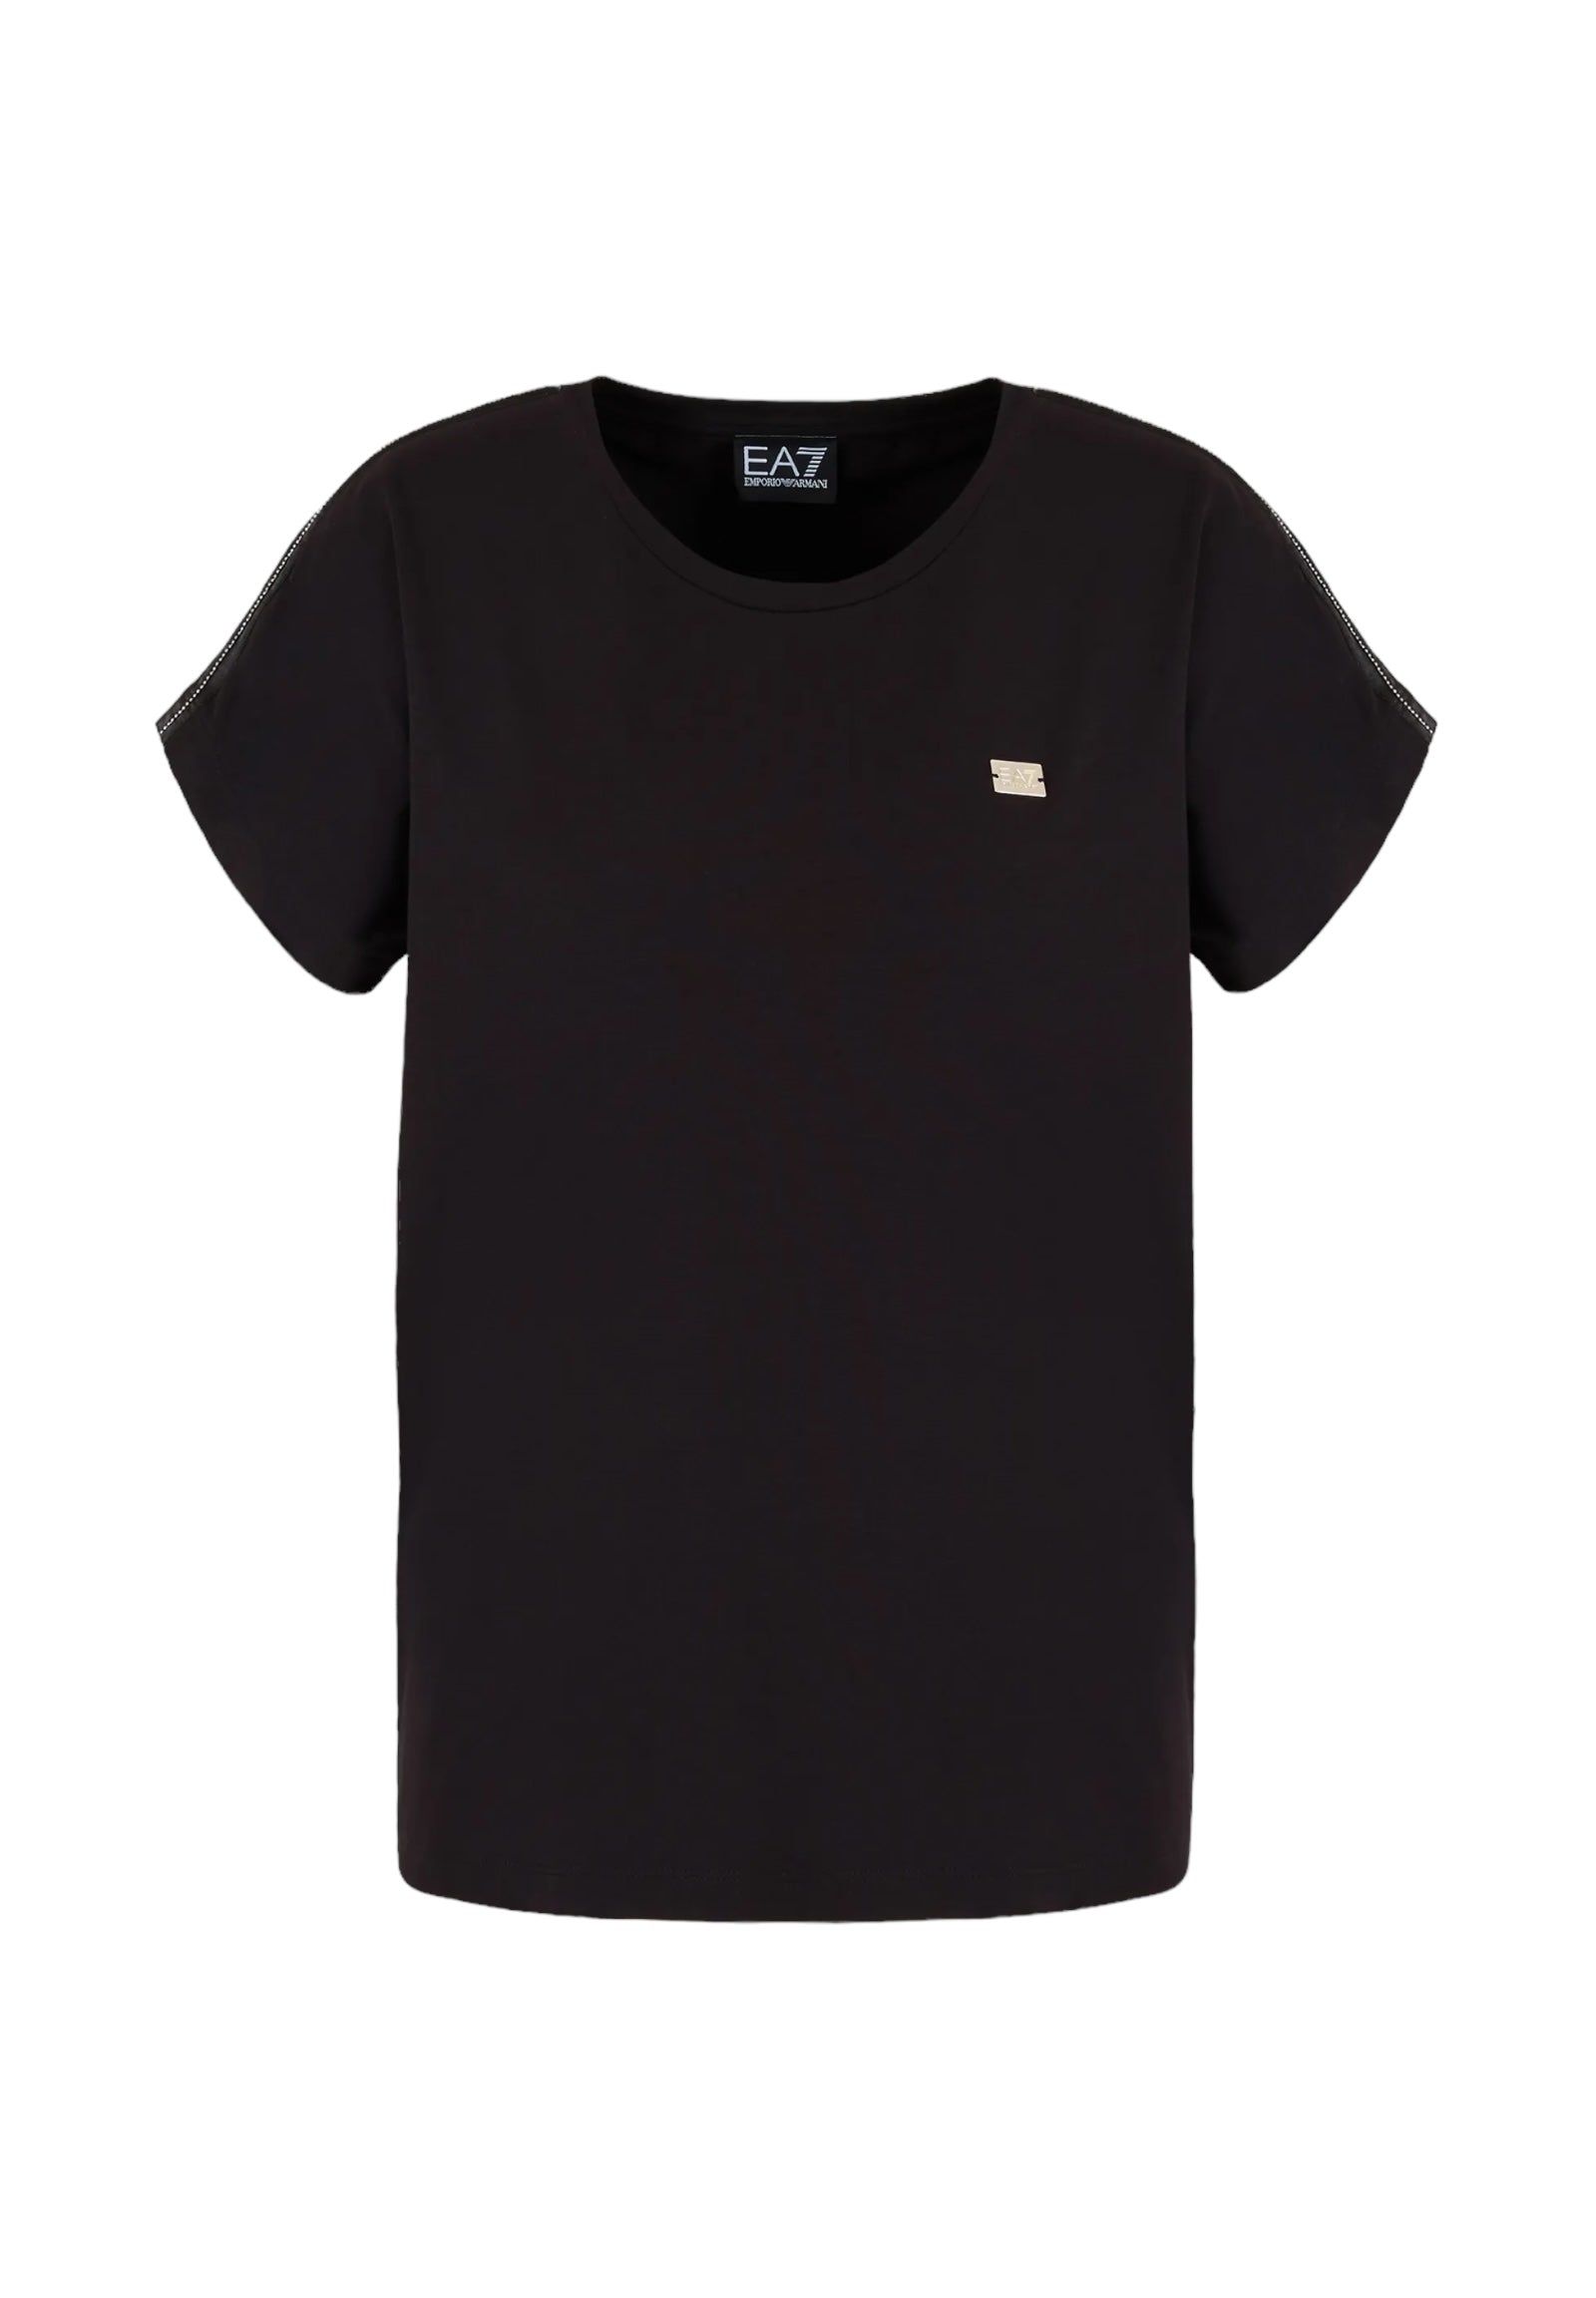 T-Shirt 3dtt41 Black